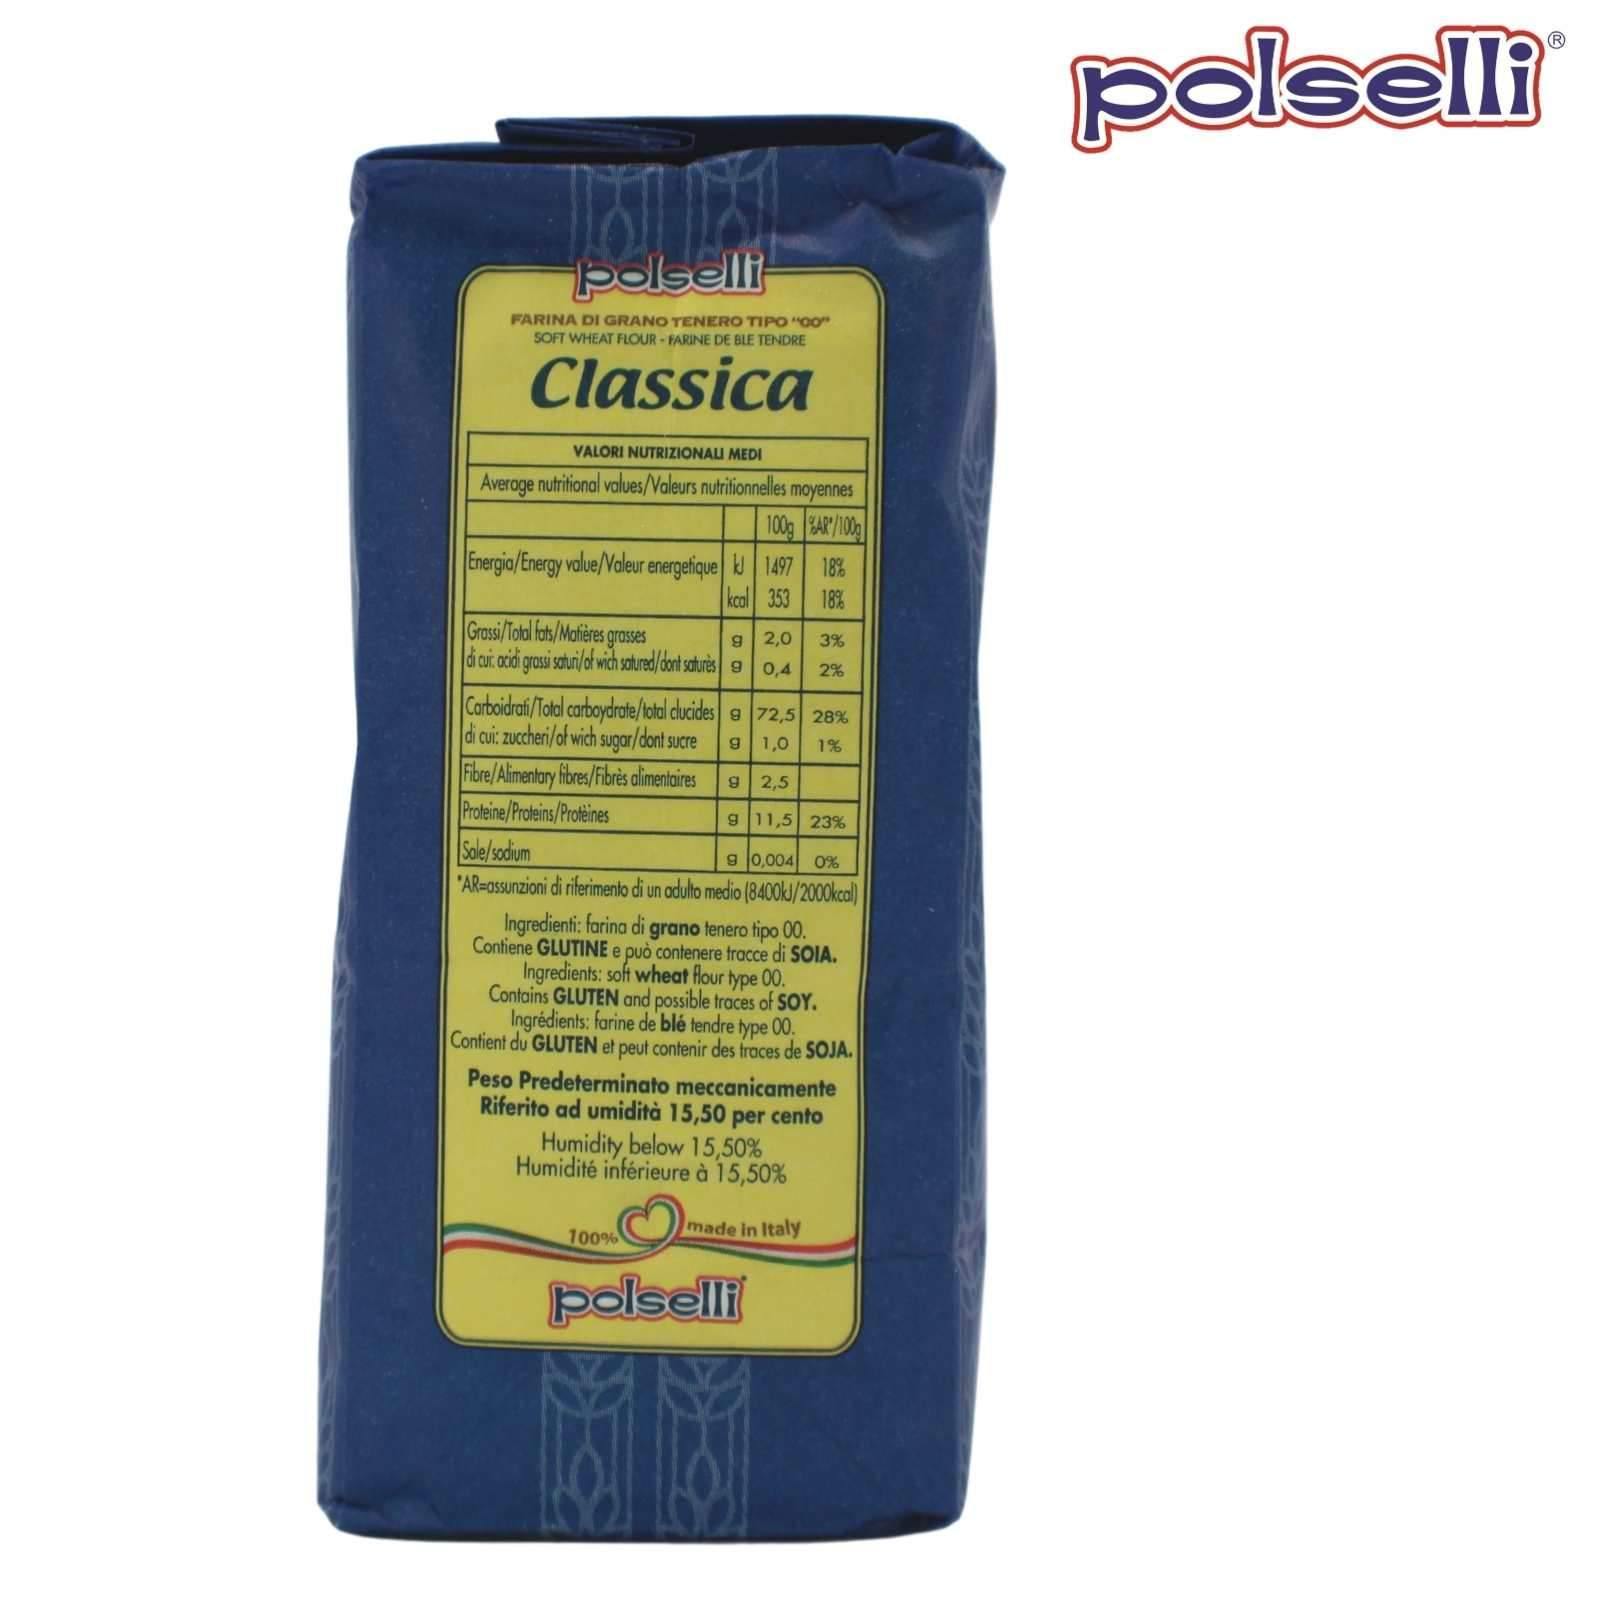 Polselli: Classica Tipo 00 Pizza Flour (Neapolitan) 2.2 lb. Bag - Wholesale Italian Food